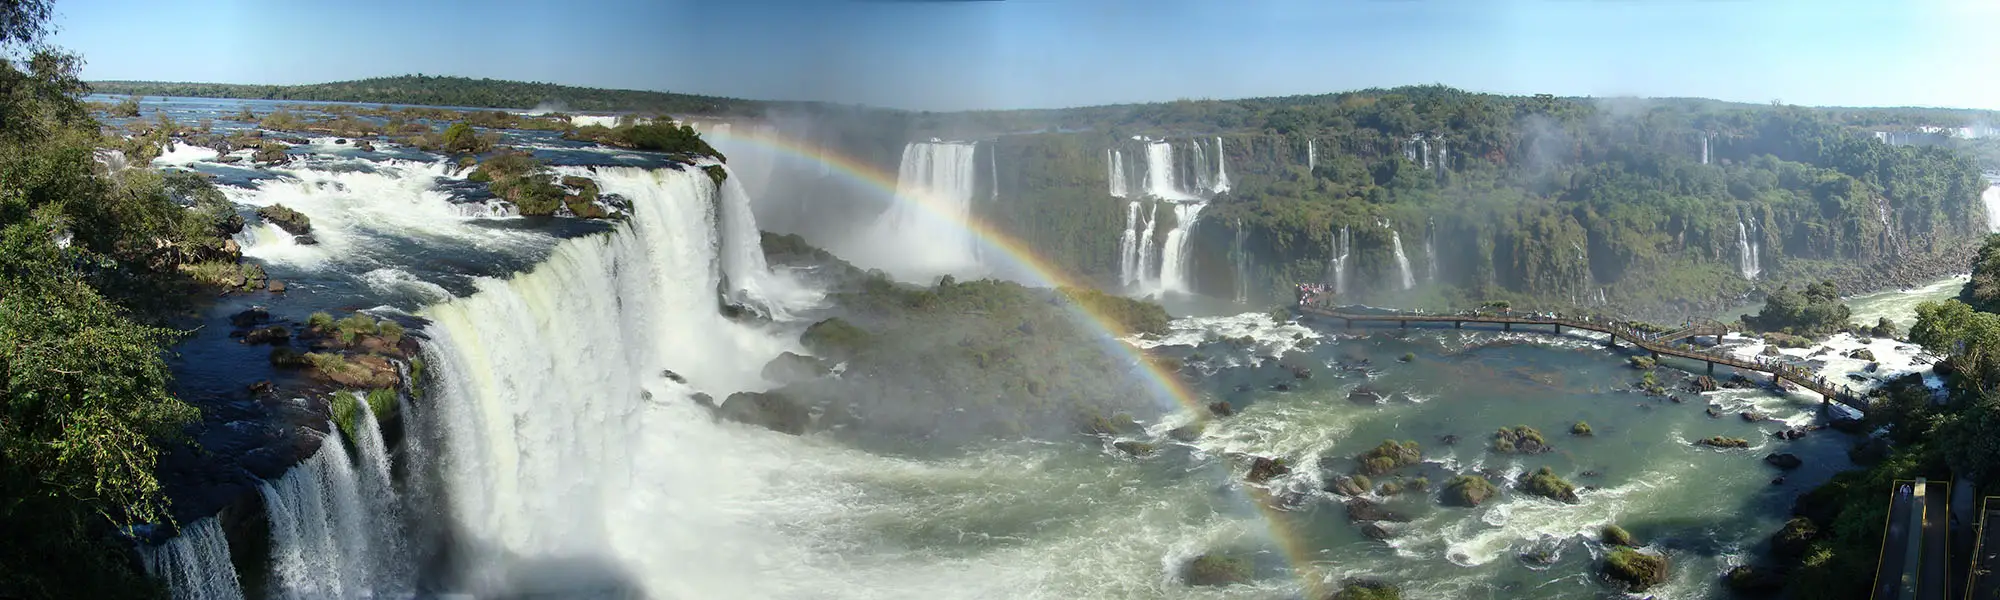 Iguazu Falls header